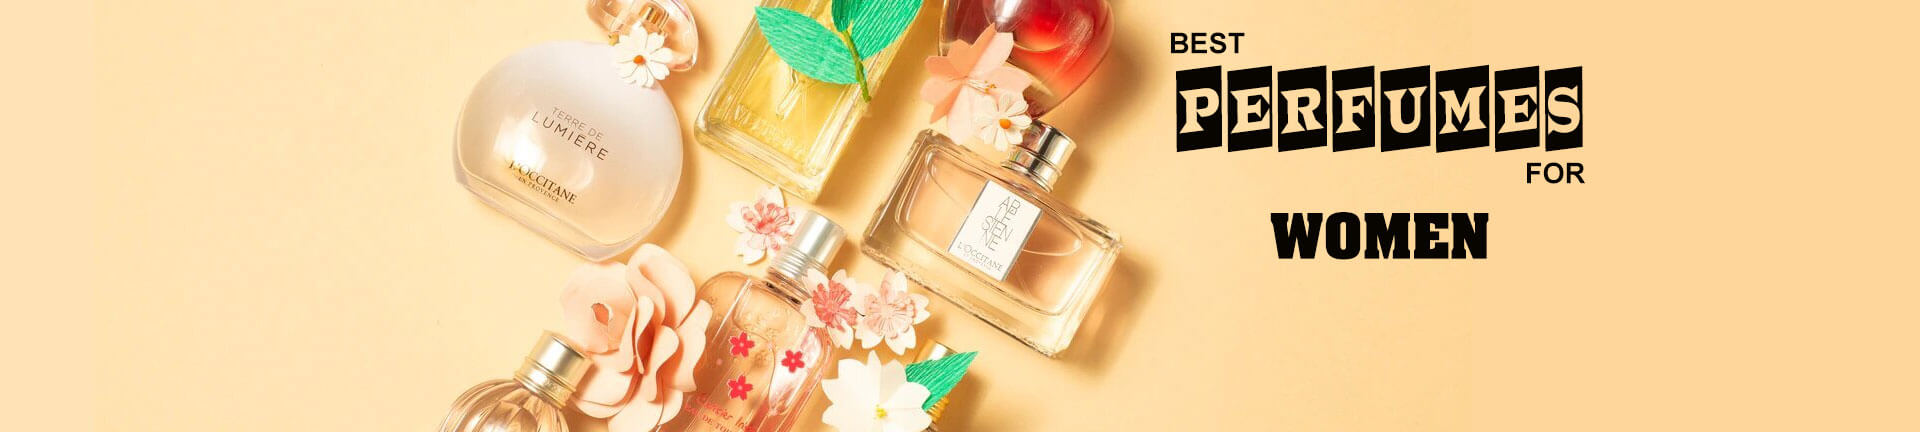 Buy Online Perfumes for Women at Best Price in Pakistan - Kayazar